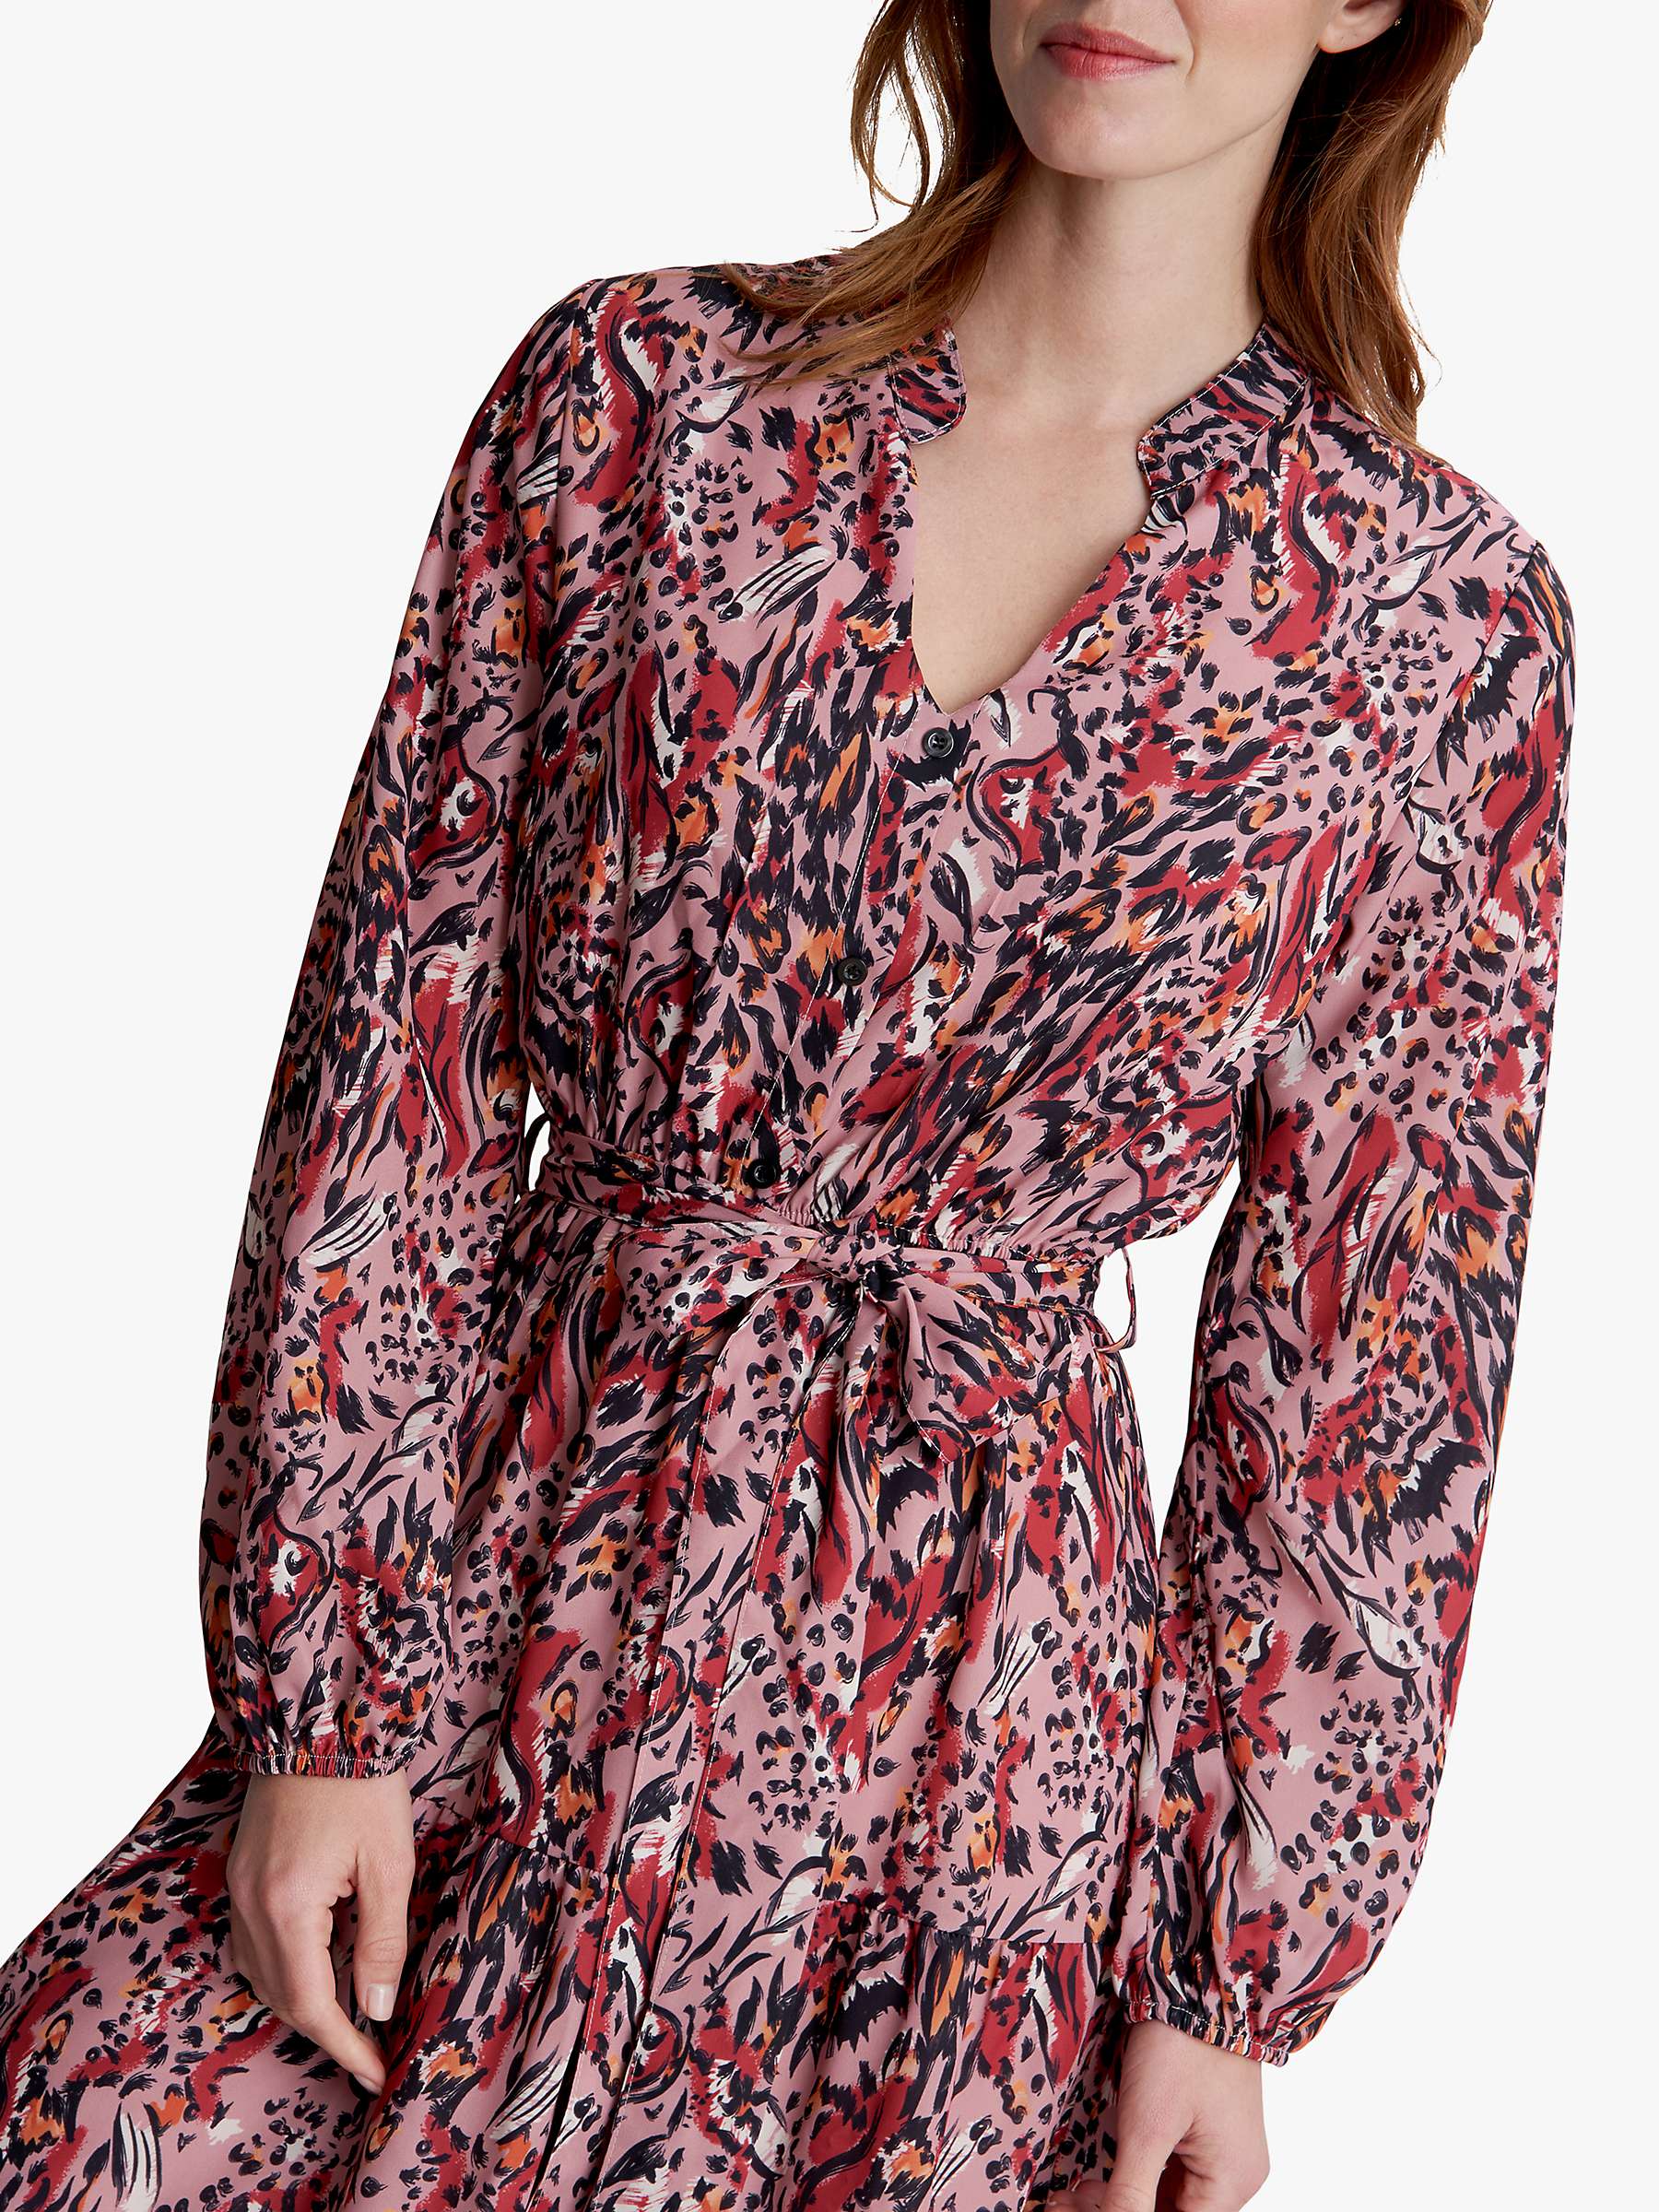 Buy Gina Bacconi Graycin Animal Print Midi Dress, Pink/Multi Online at johnlewis.com